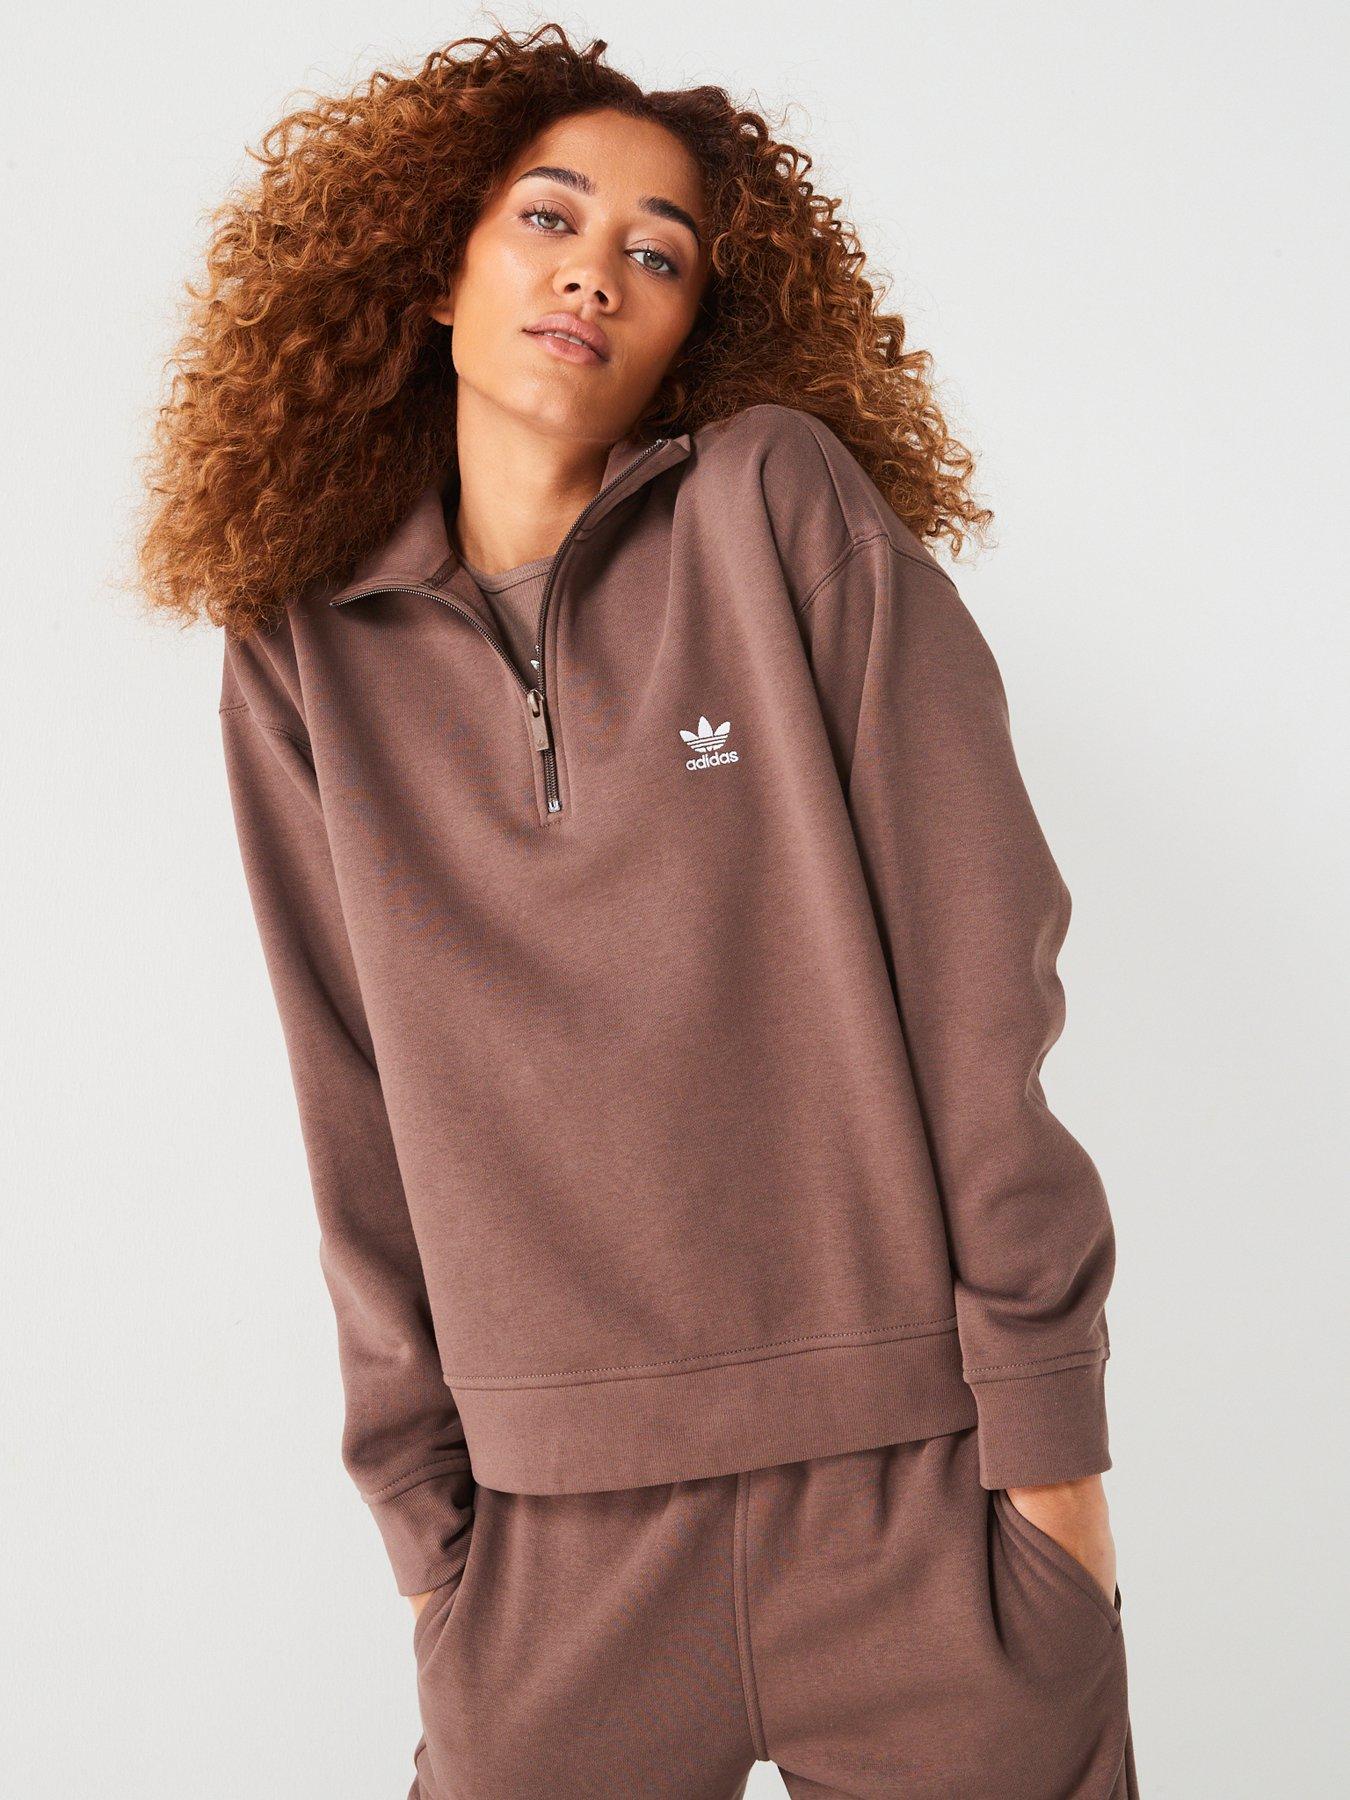 adidas Originals Womens Half Zip Sweatshirt - Brown, Brown, Size Xl, Women